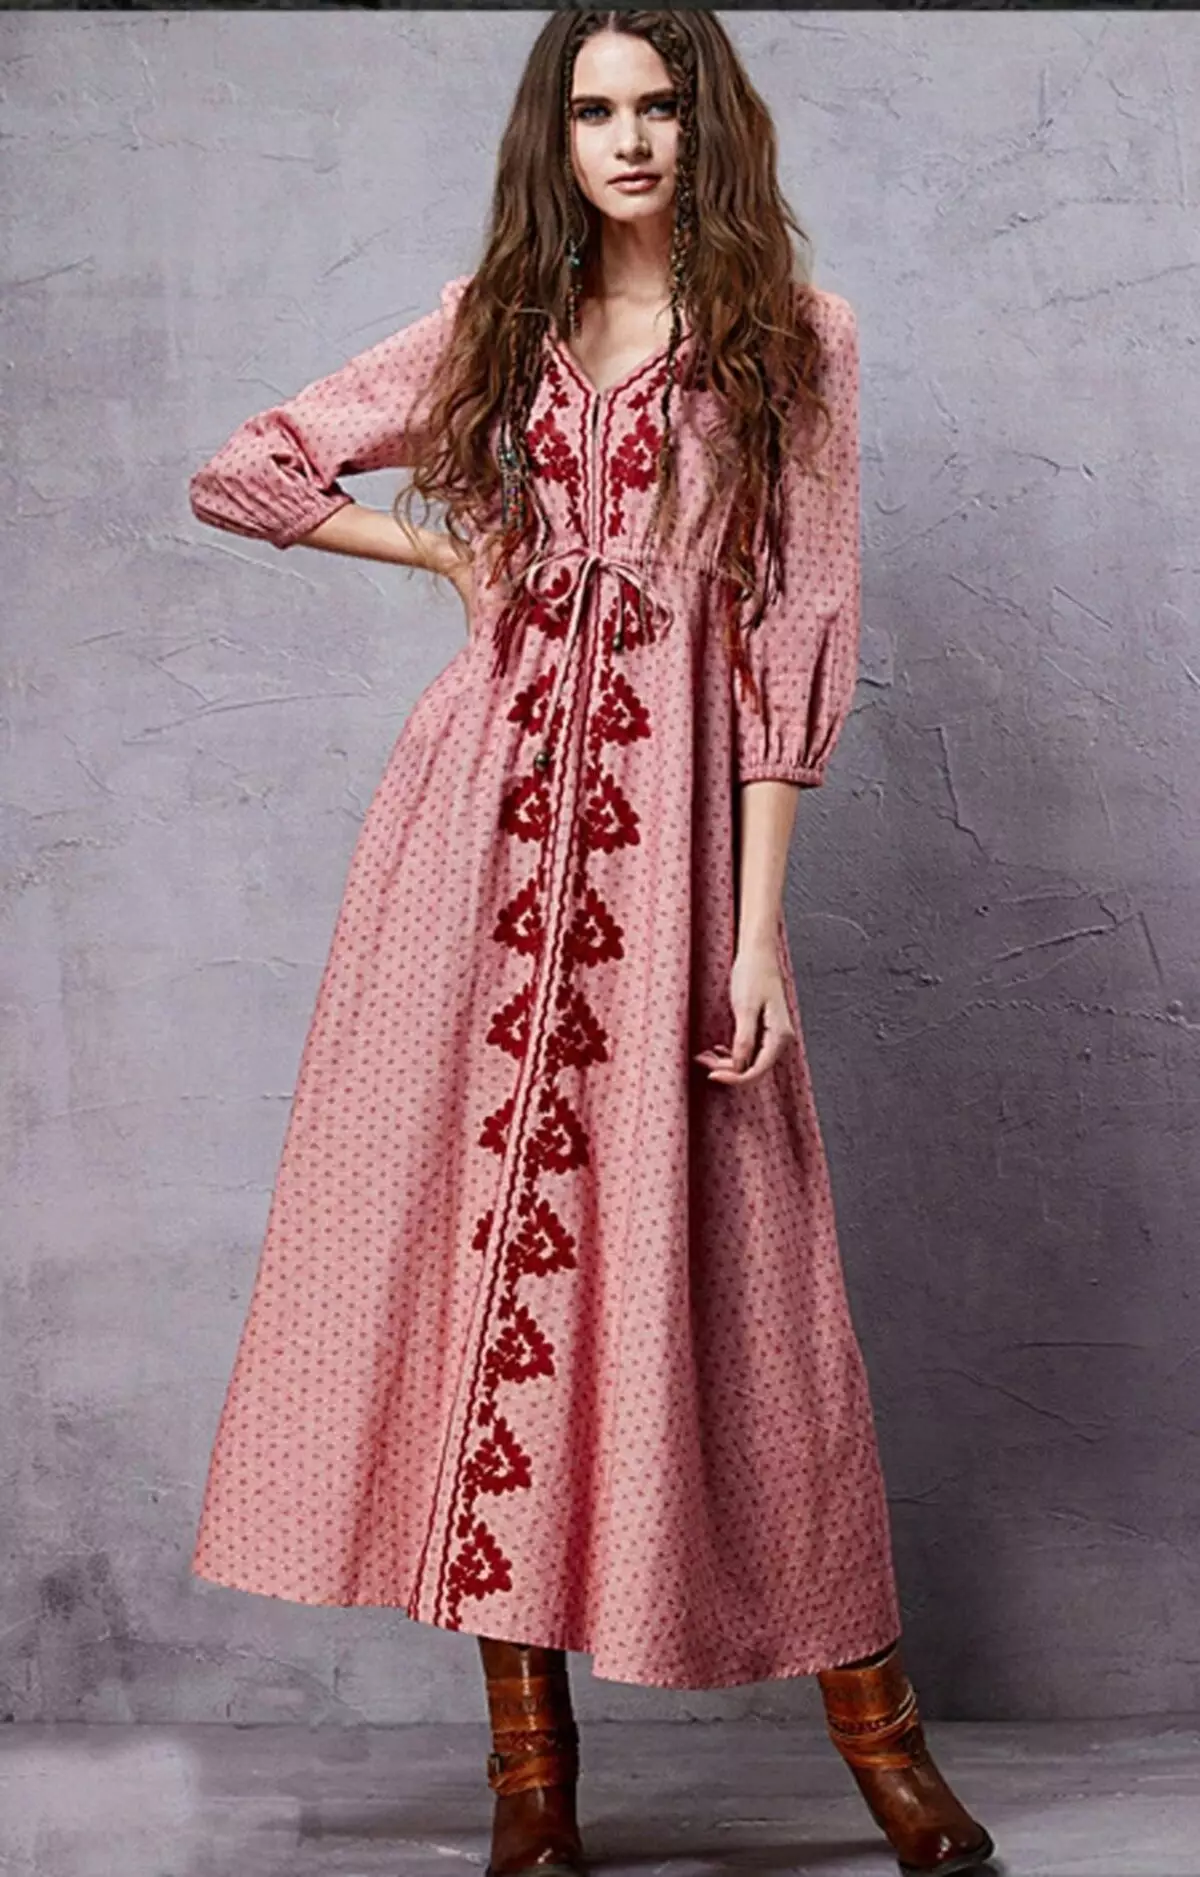 Bo-rustic midi-style dress